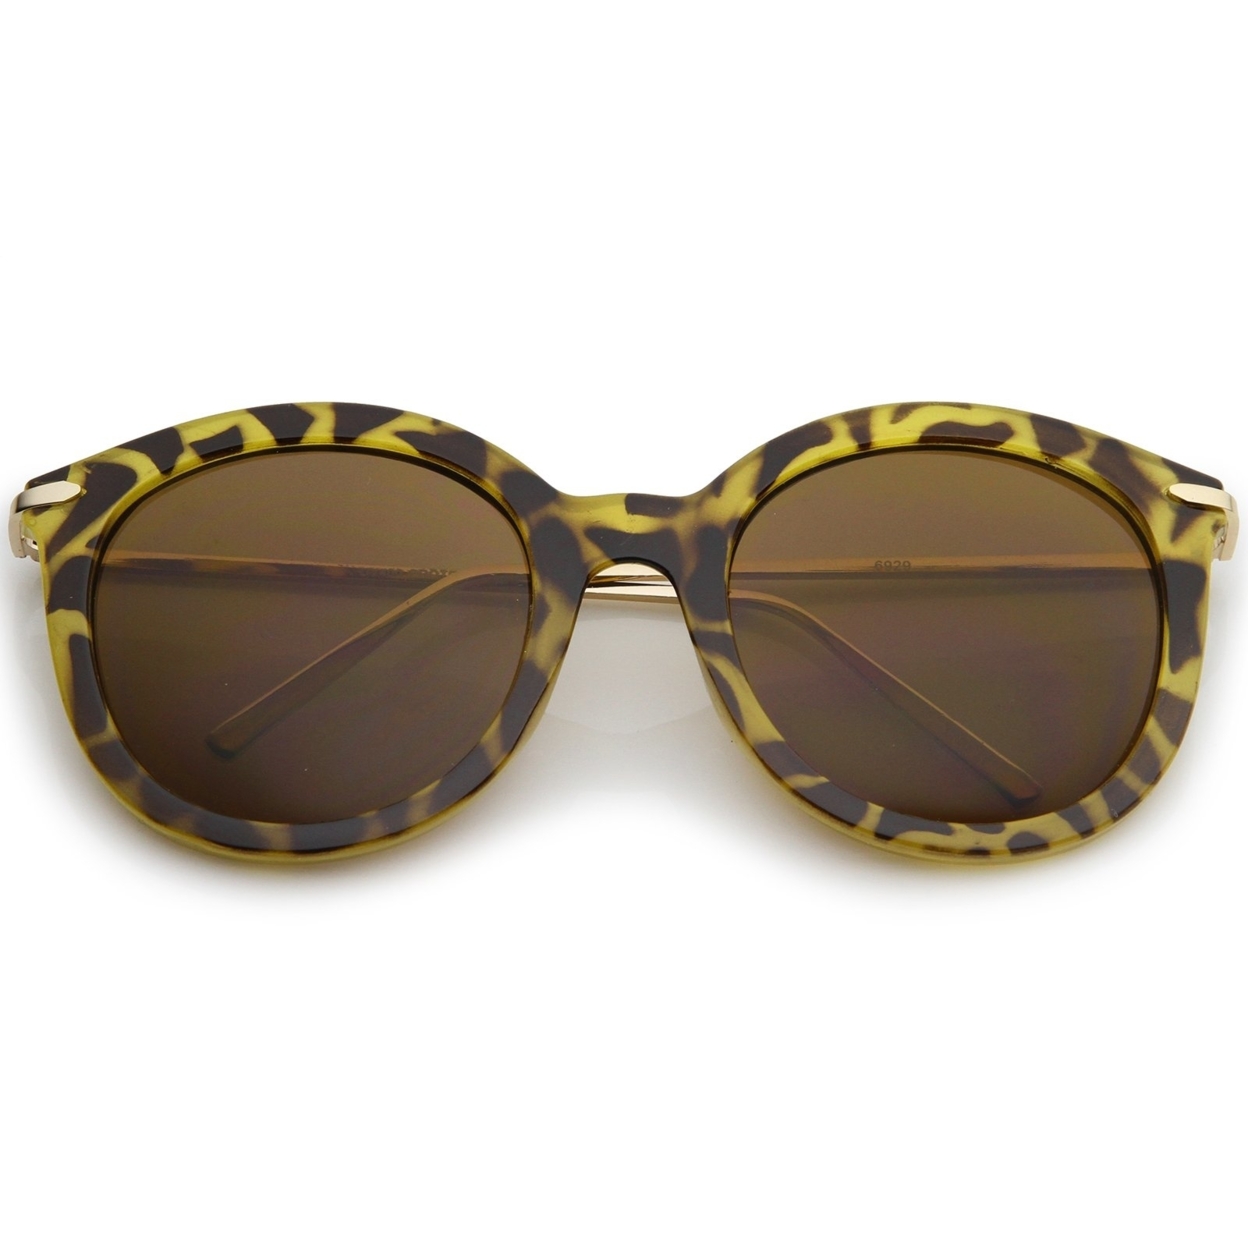 Women's Classic Oversize Ultra Slim Metal Temple Round Sunglasses 56mm - Tortoise-Gold / Brown